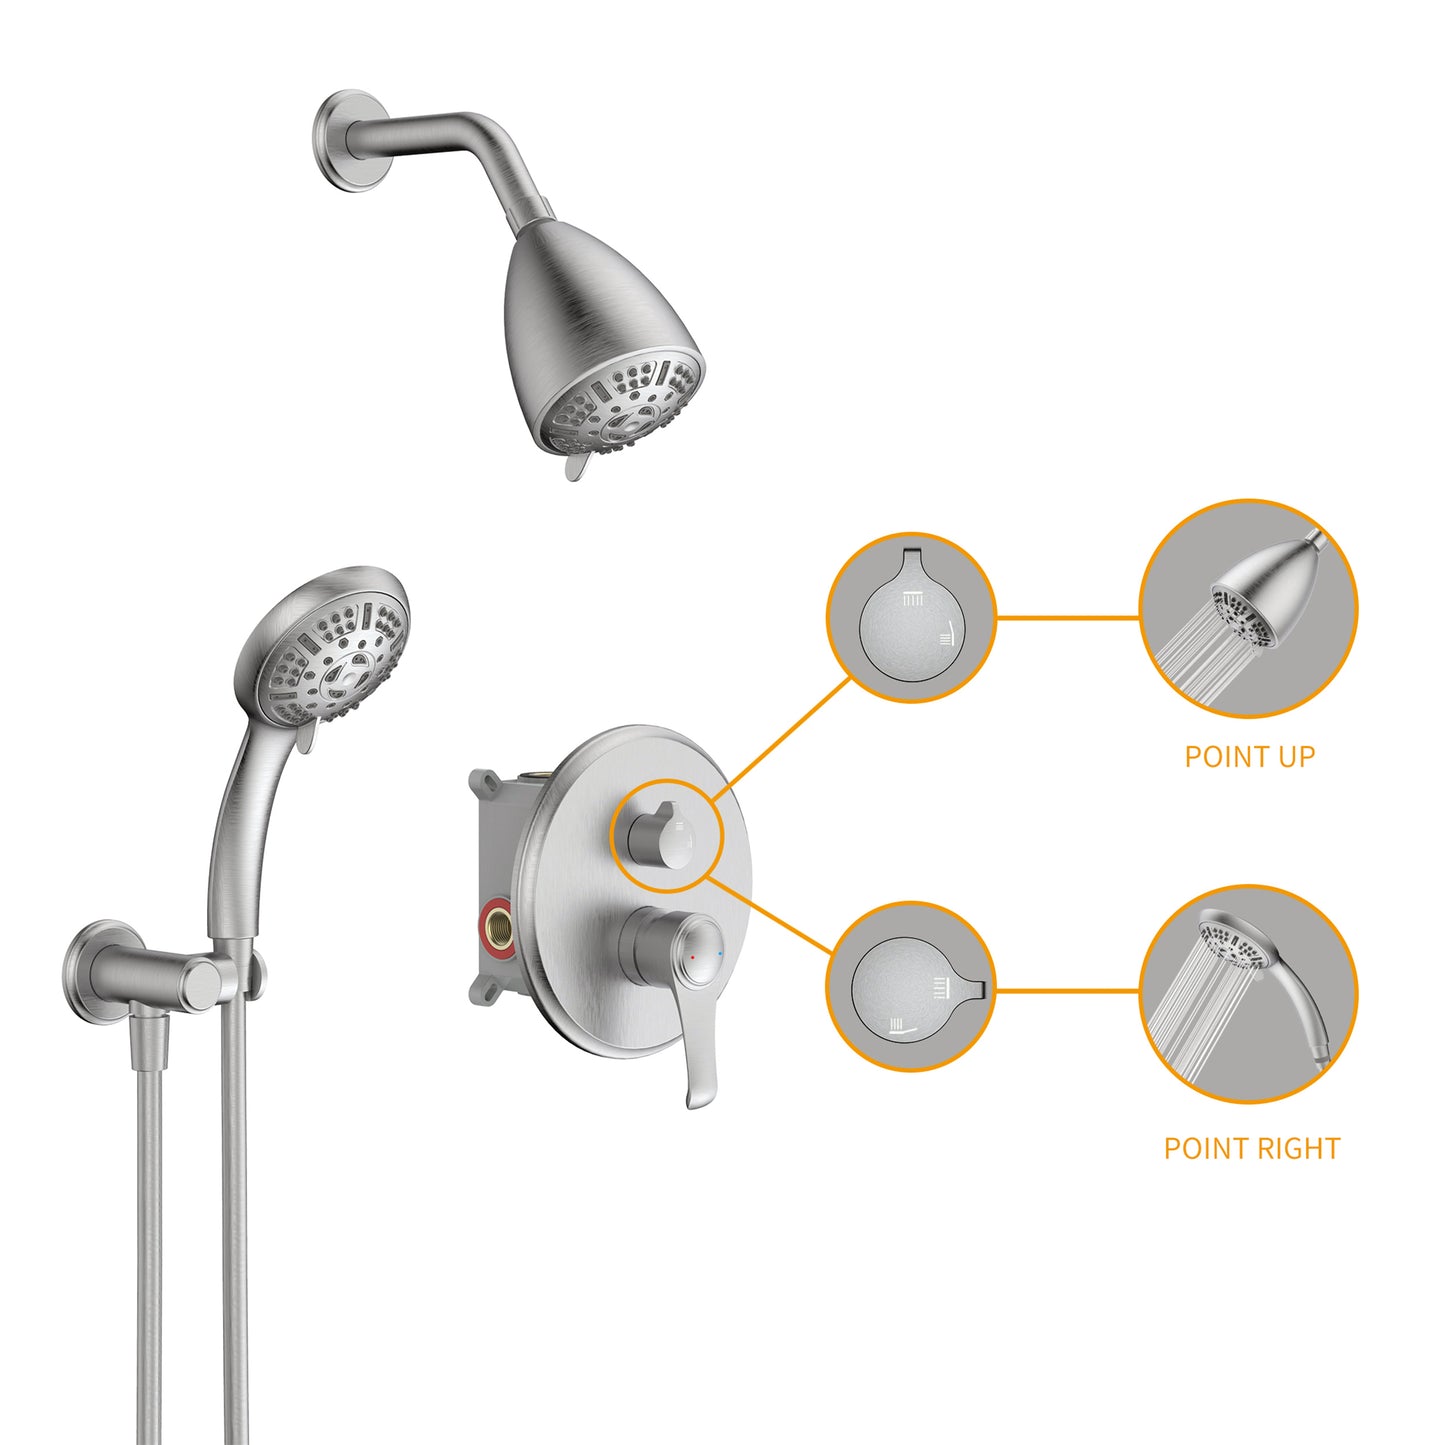 Large Amount of water Multi Function Shower Head - Shower System,  9-Function Hand Shower, Simple Style, Filter Shower, Brushed Nickel